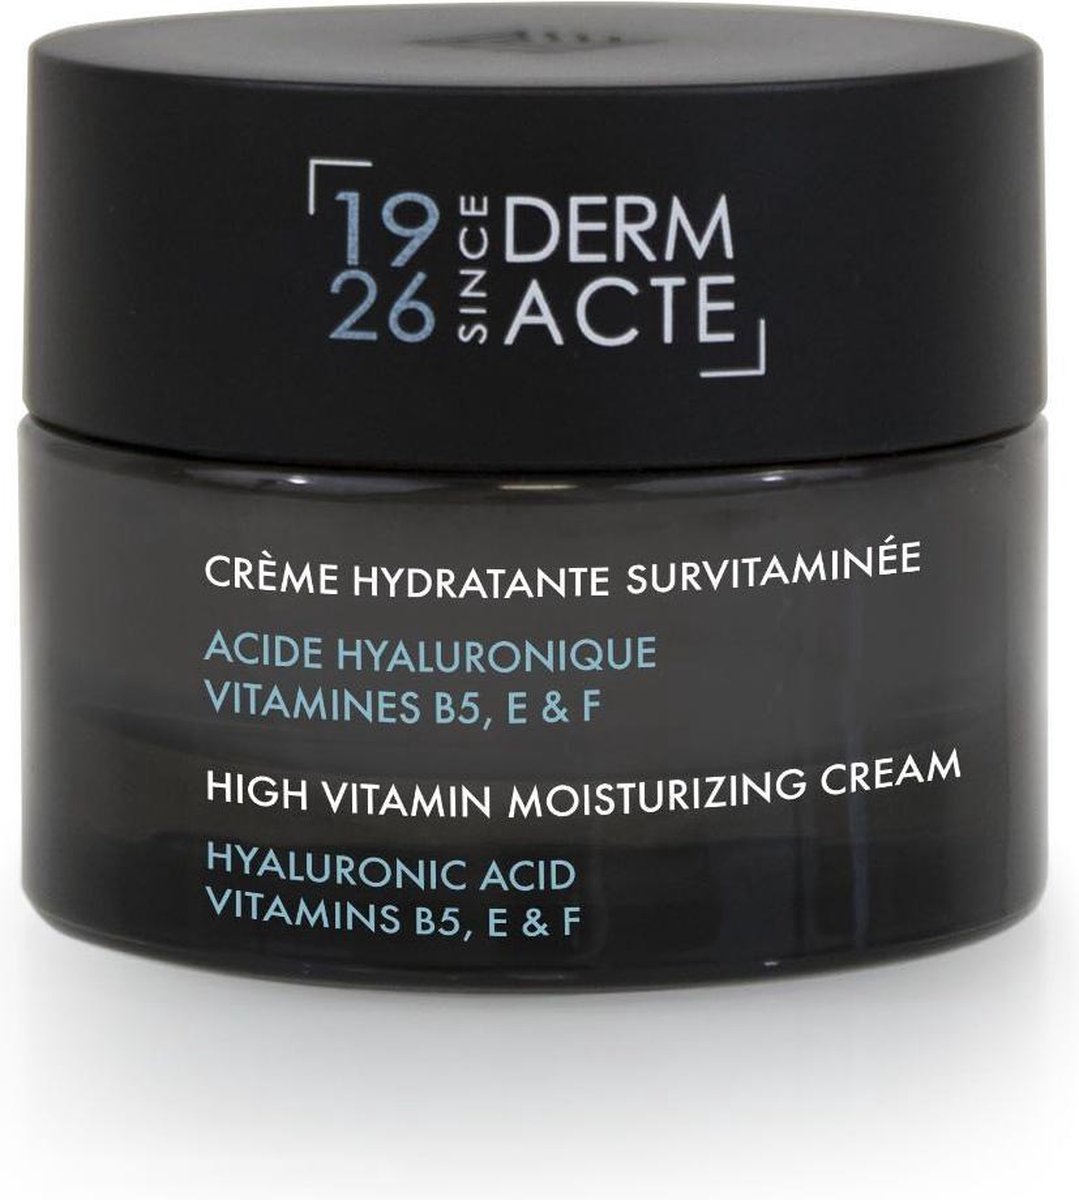 Académie Dagcrème Face Derm Acte High Vitamin Moisturizing Cream